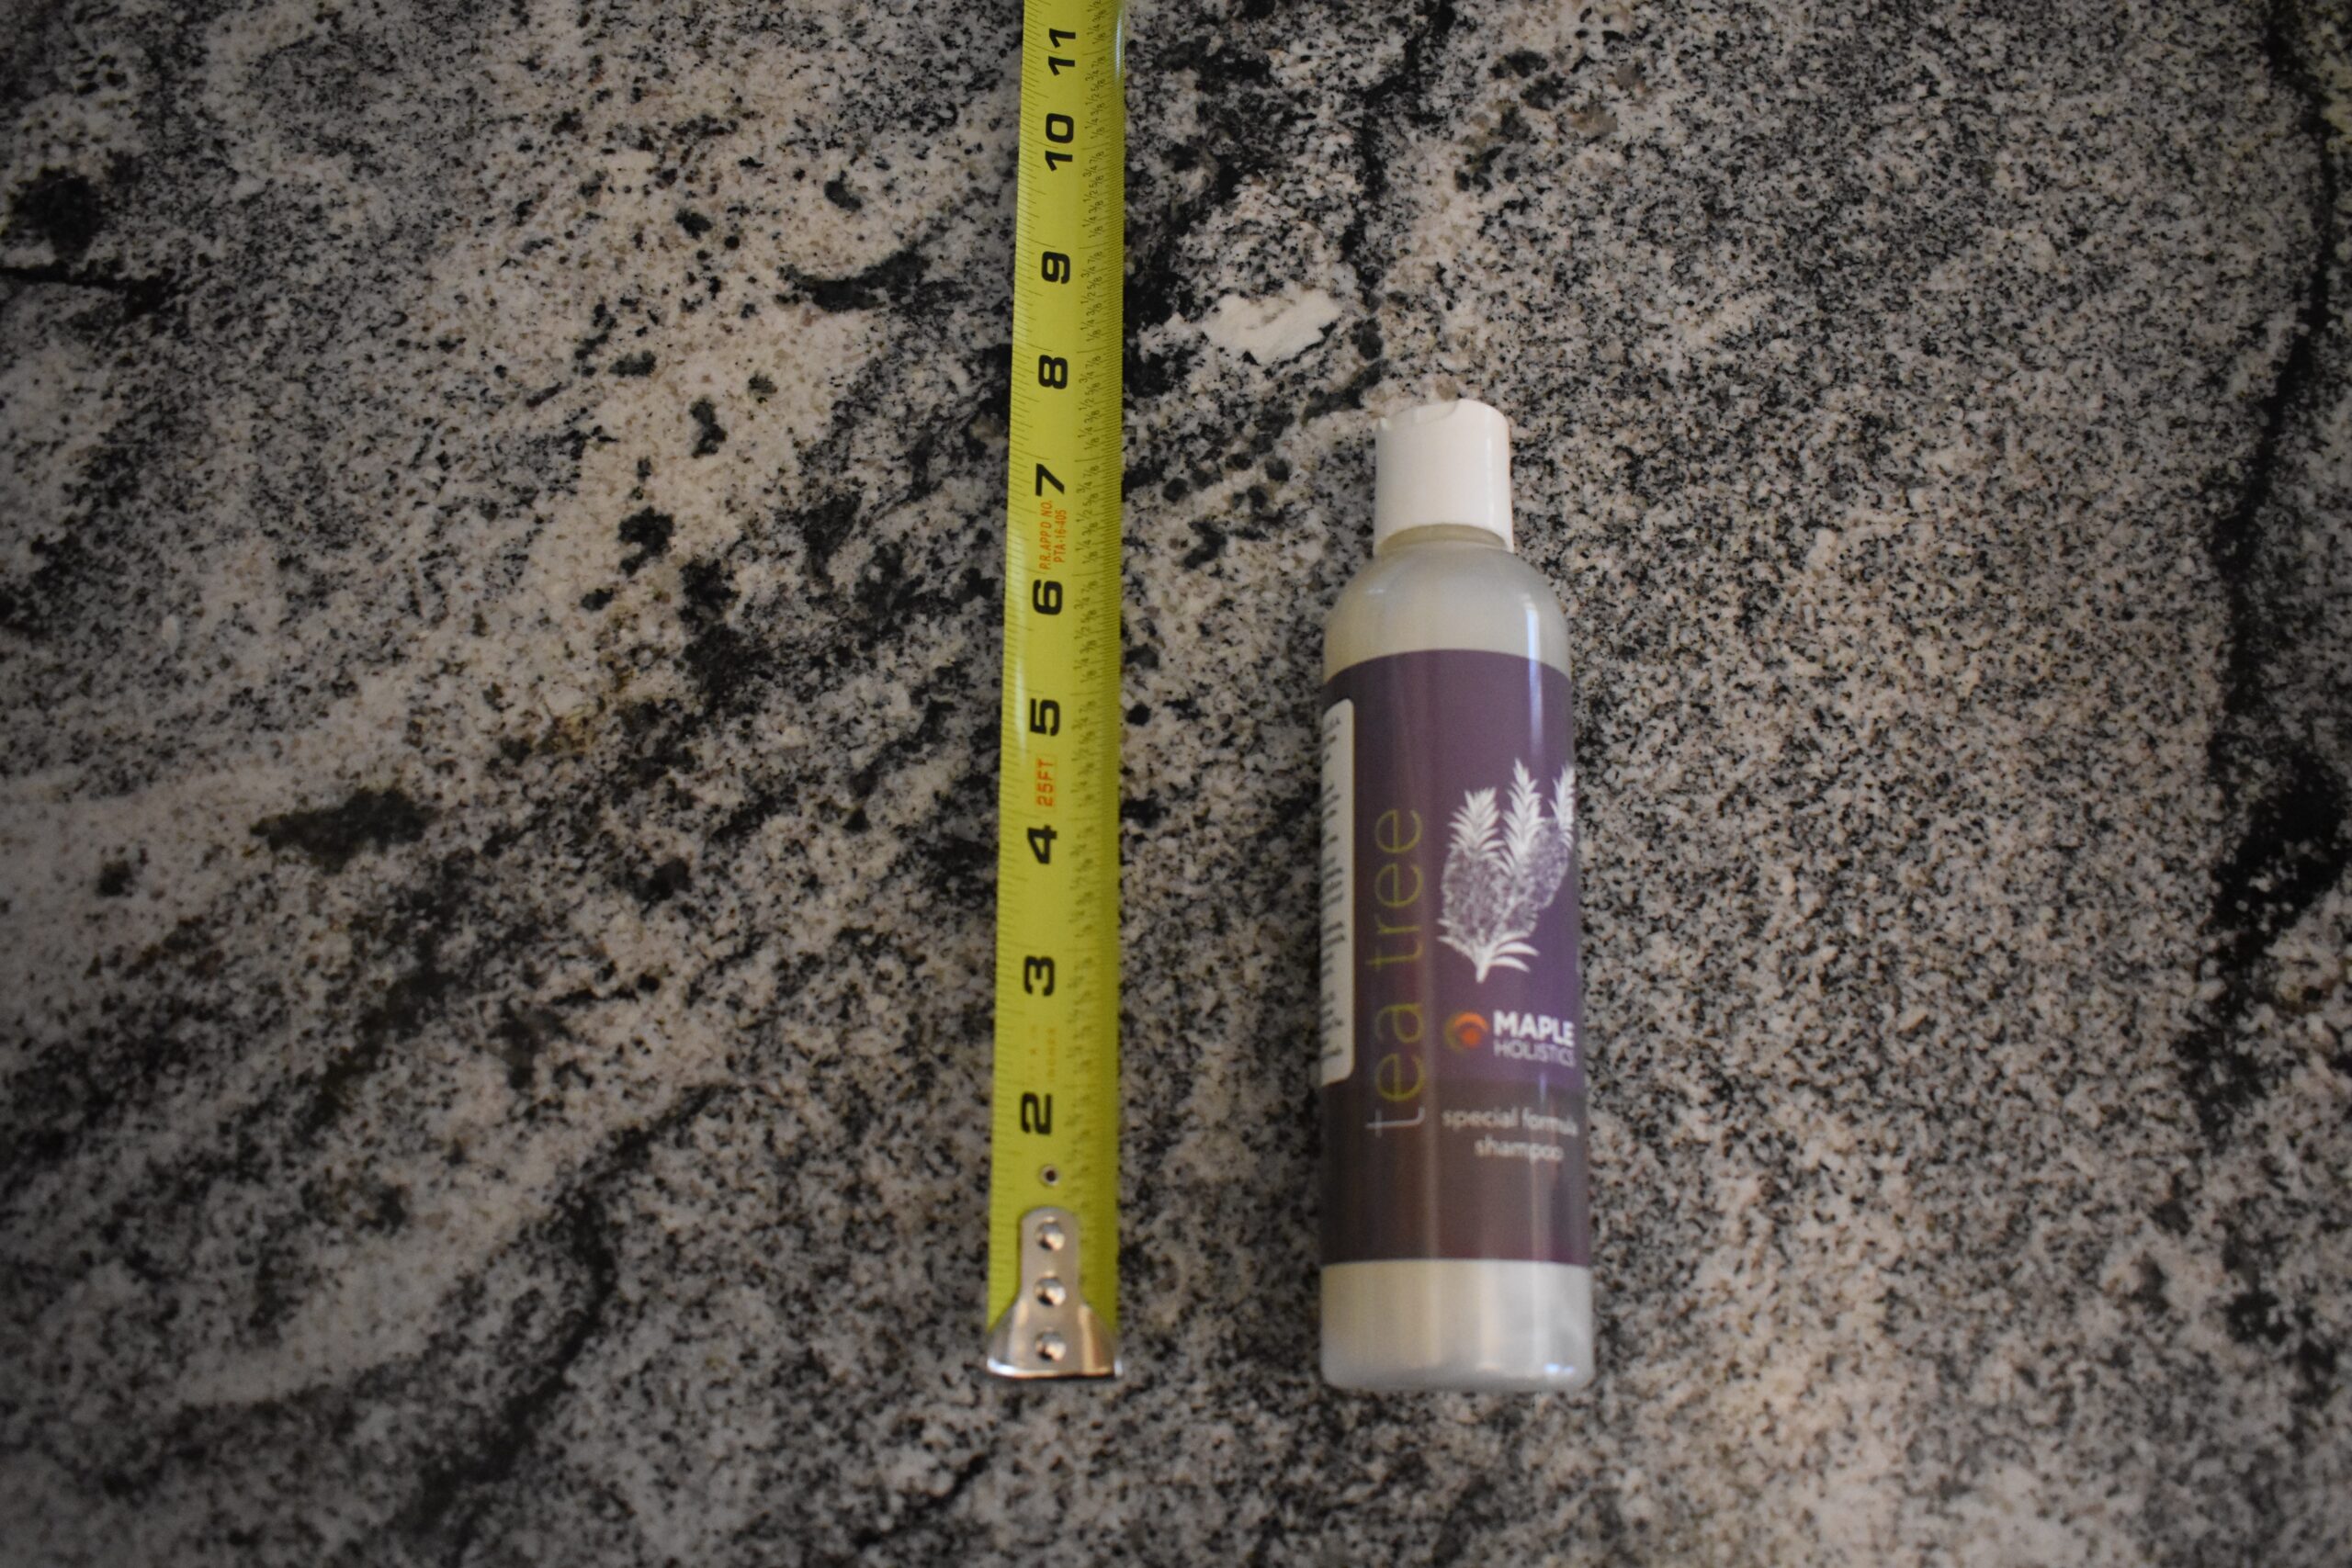 Maple holistics tea tree oil shampoo next to a measuring tape